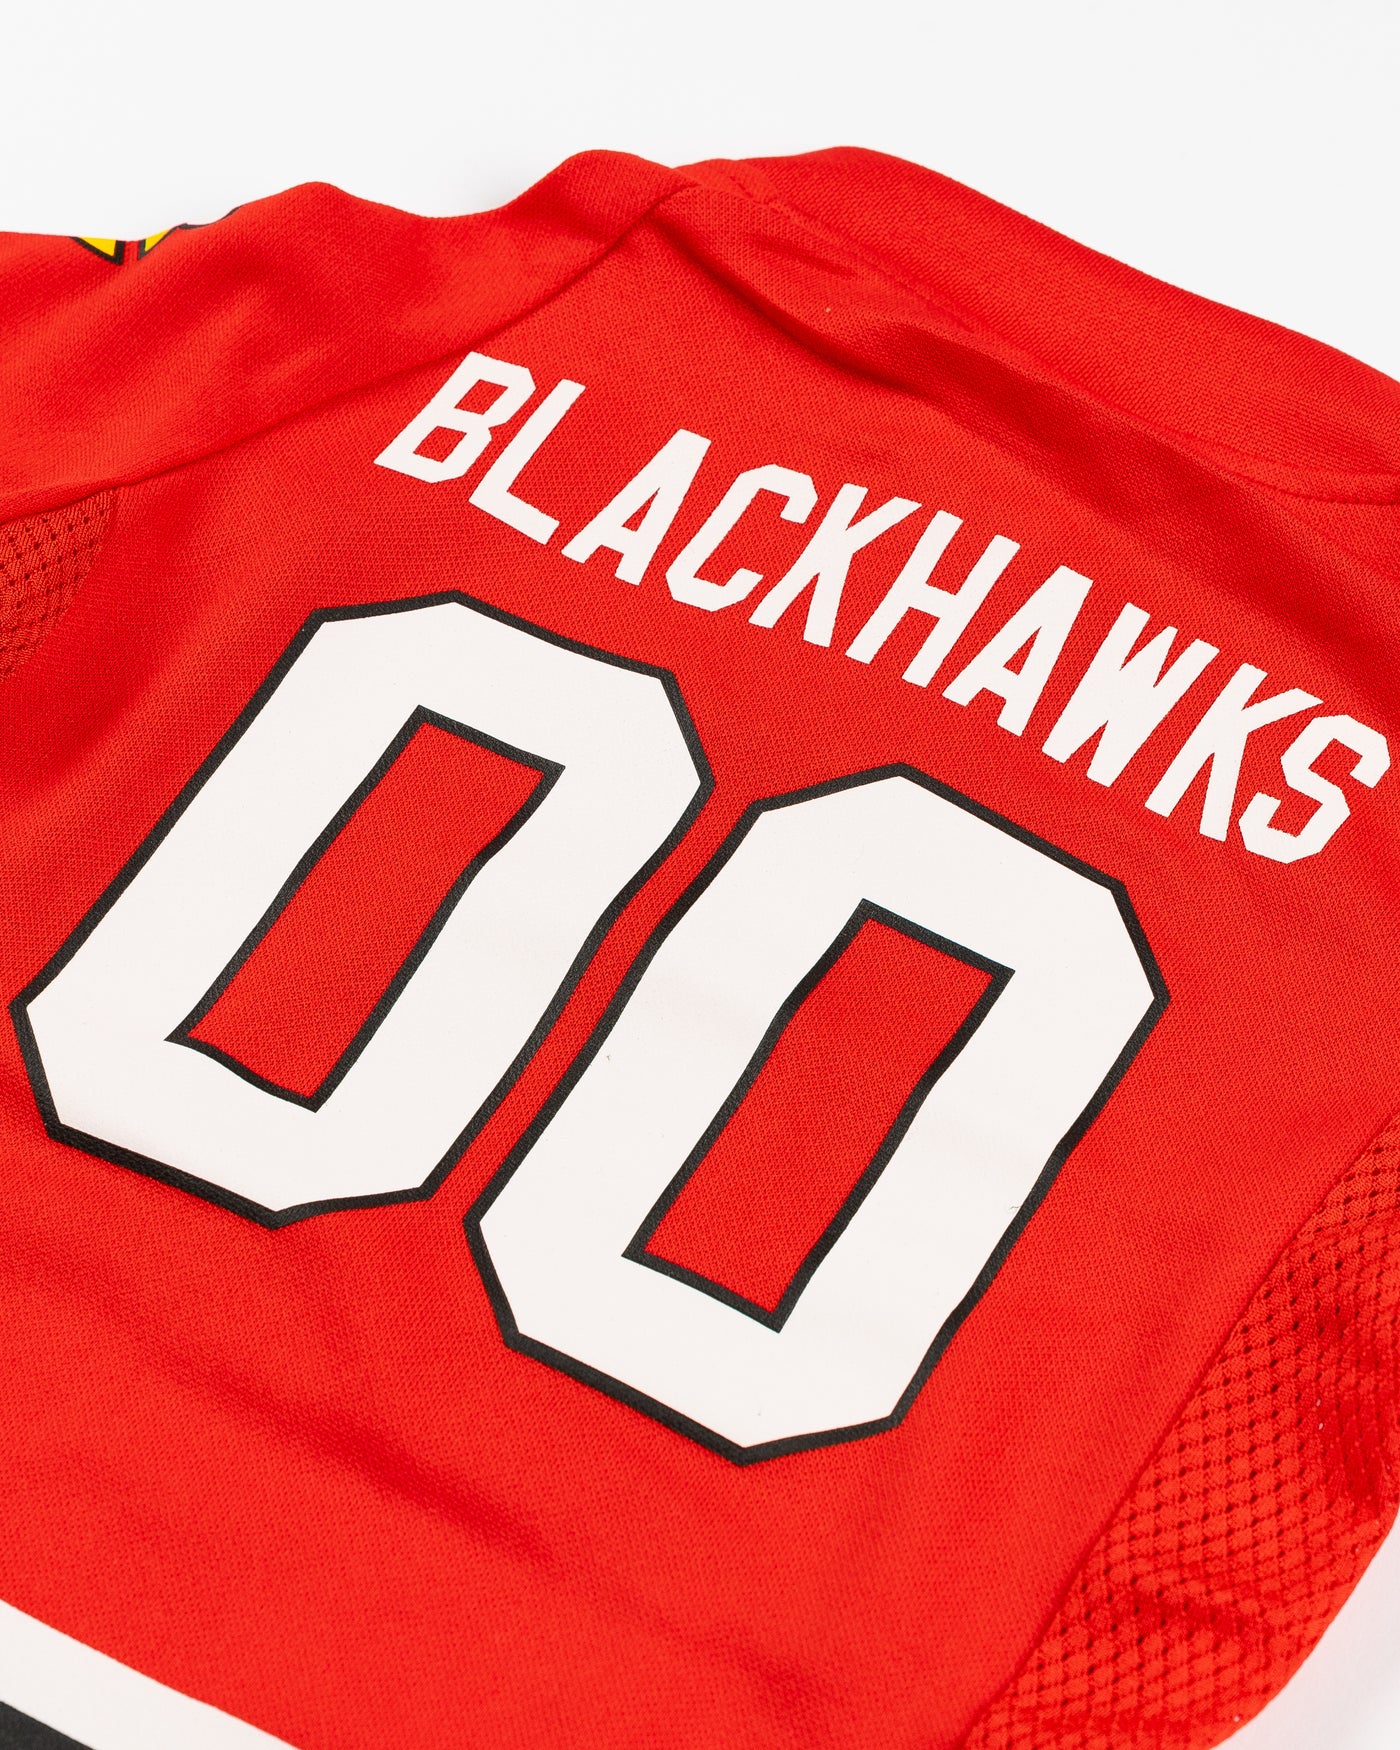 red Chicago Blackhawks pet jersey - back detail lay flat